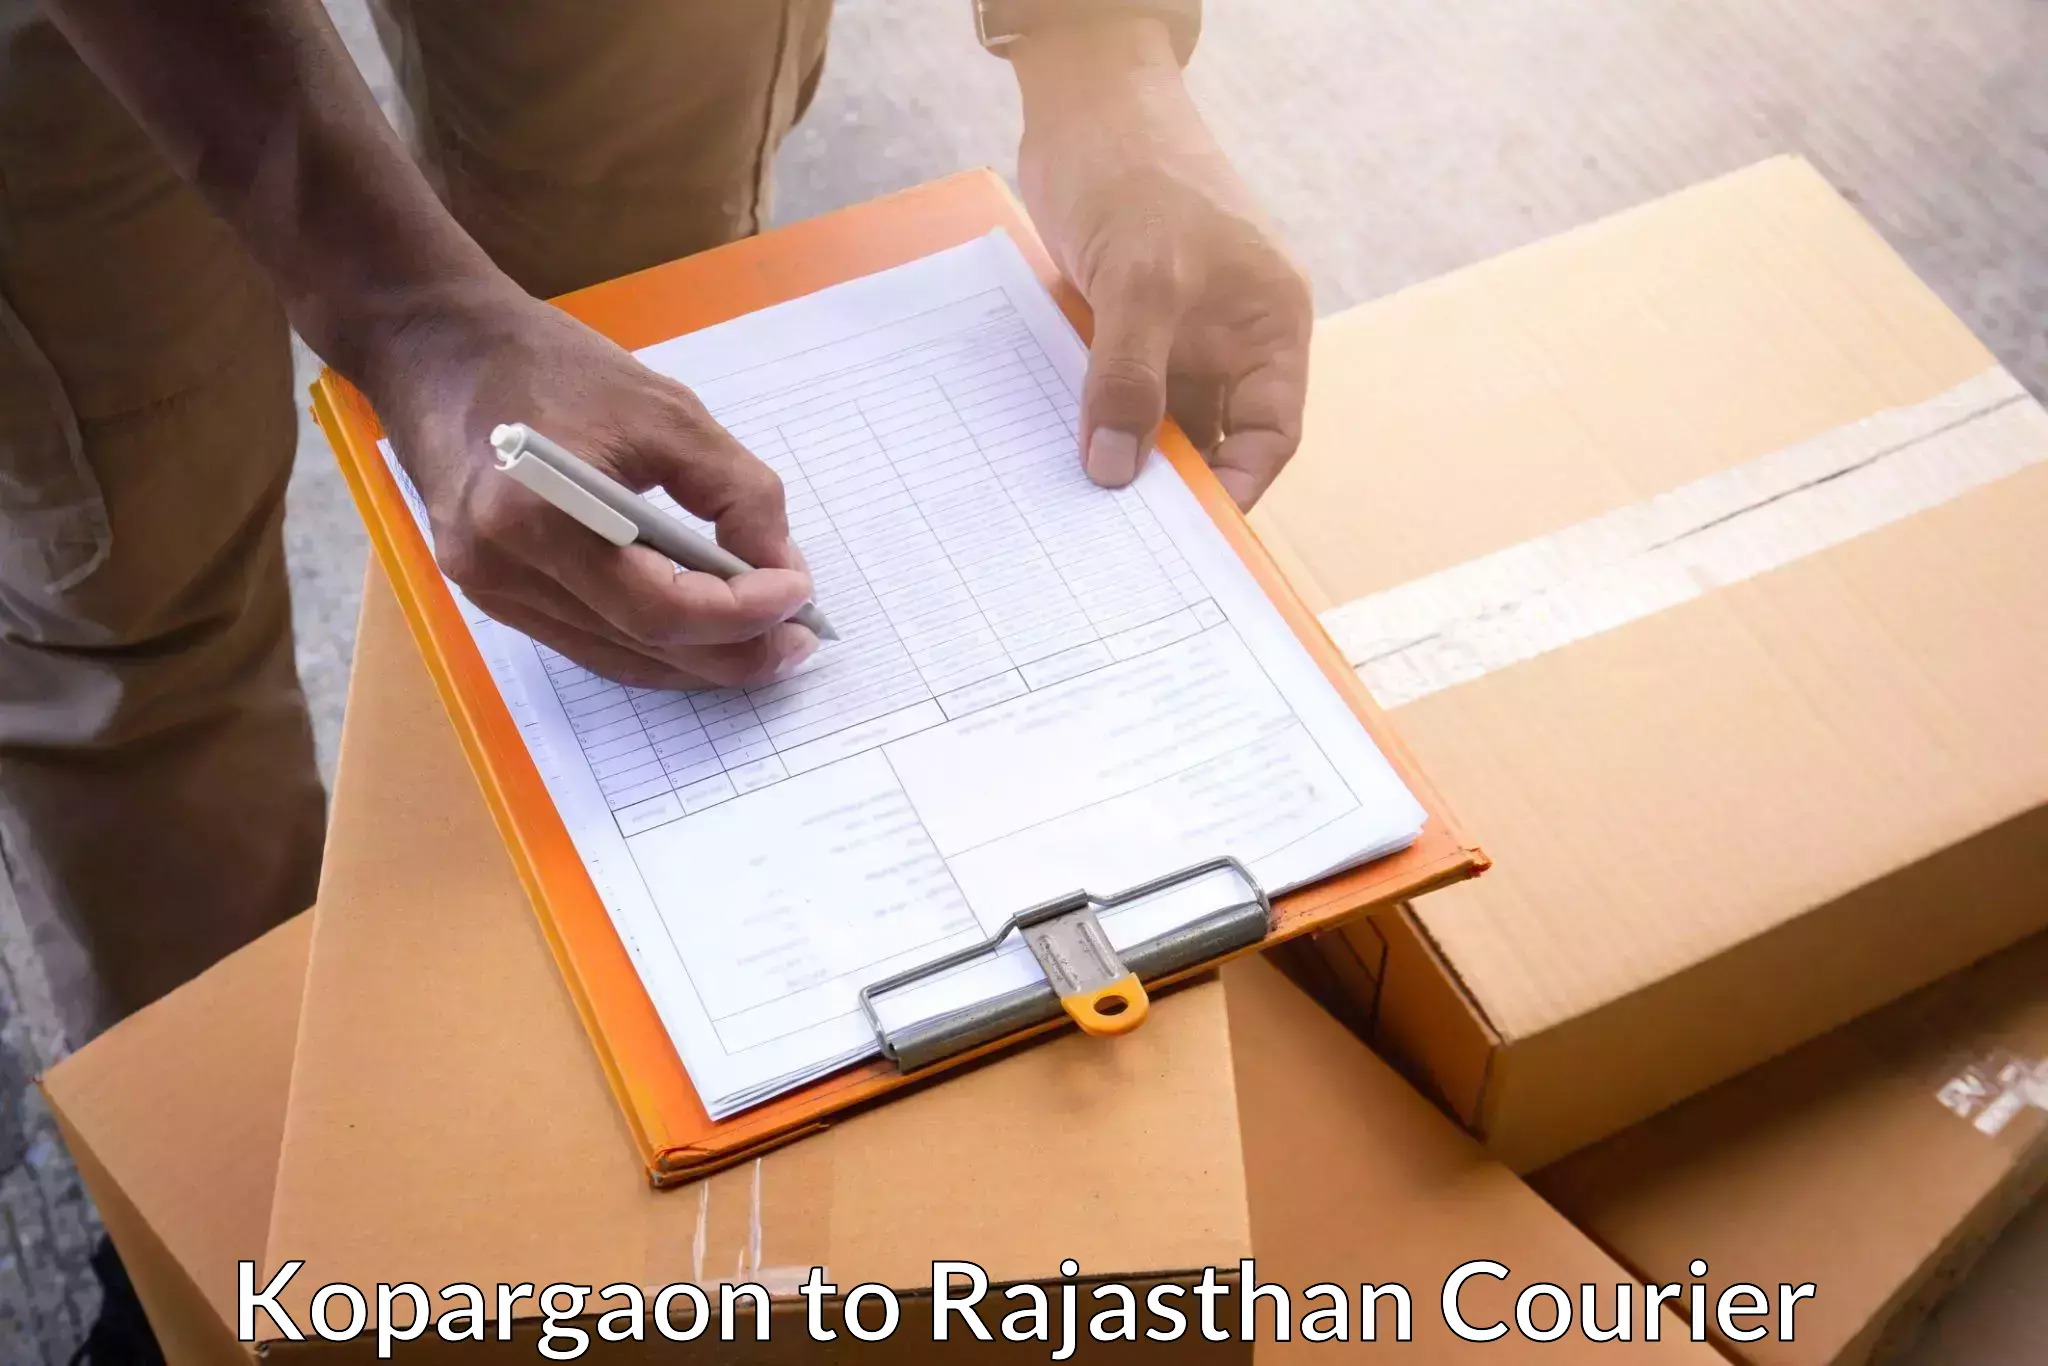 Parcel handling and care Kopargaon to Rajasthan